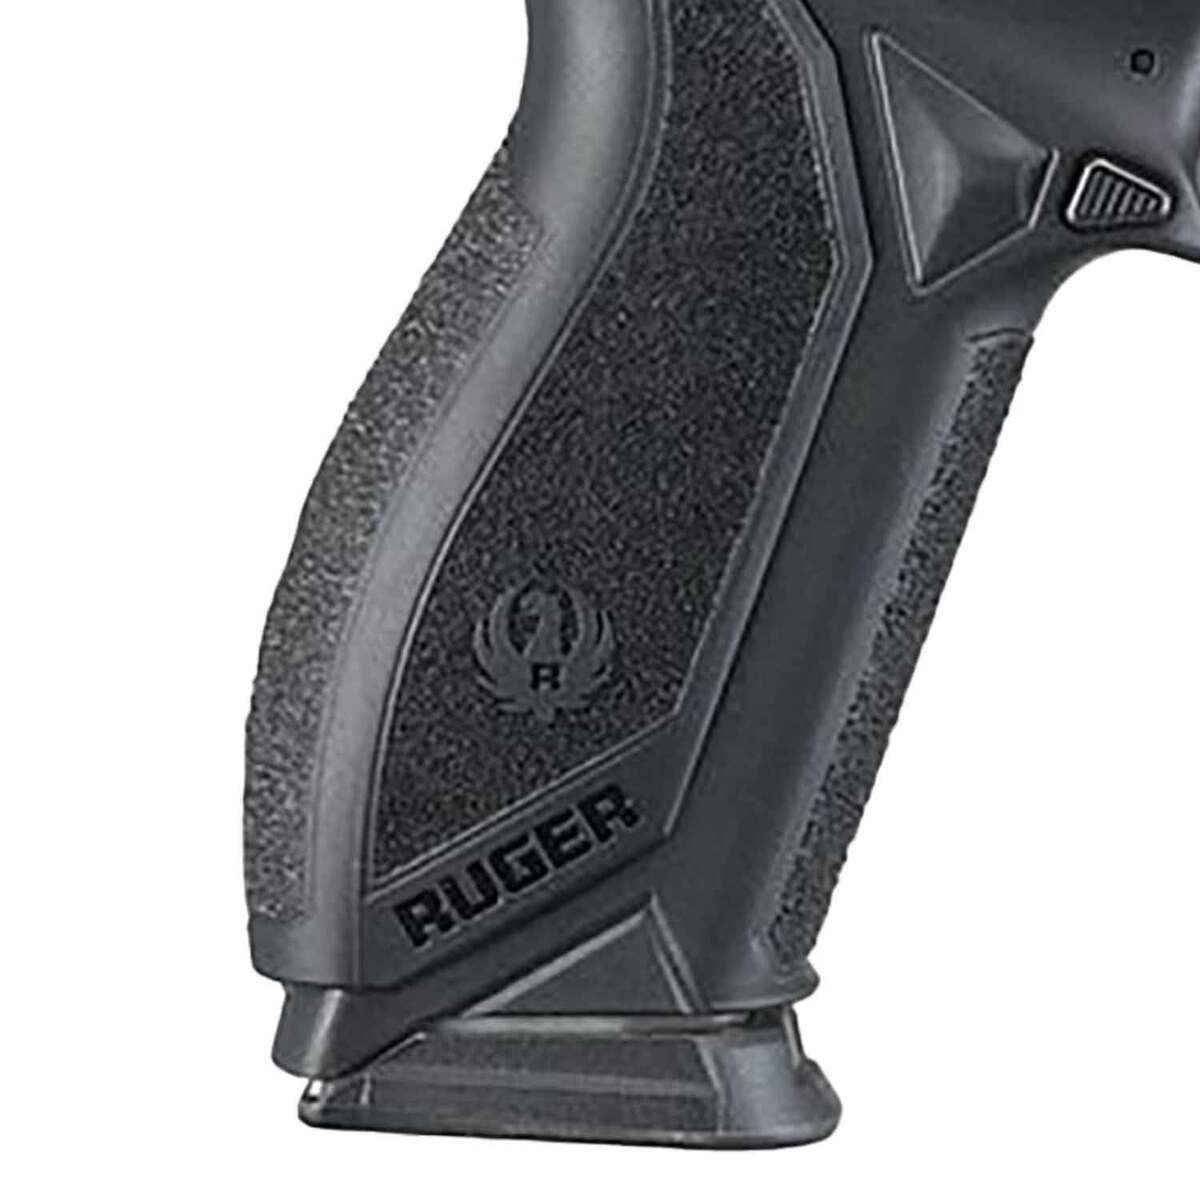 Ruger American Pro 9mm Luger 5in Black Nitride Pistol 171 Rounds